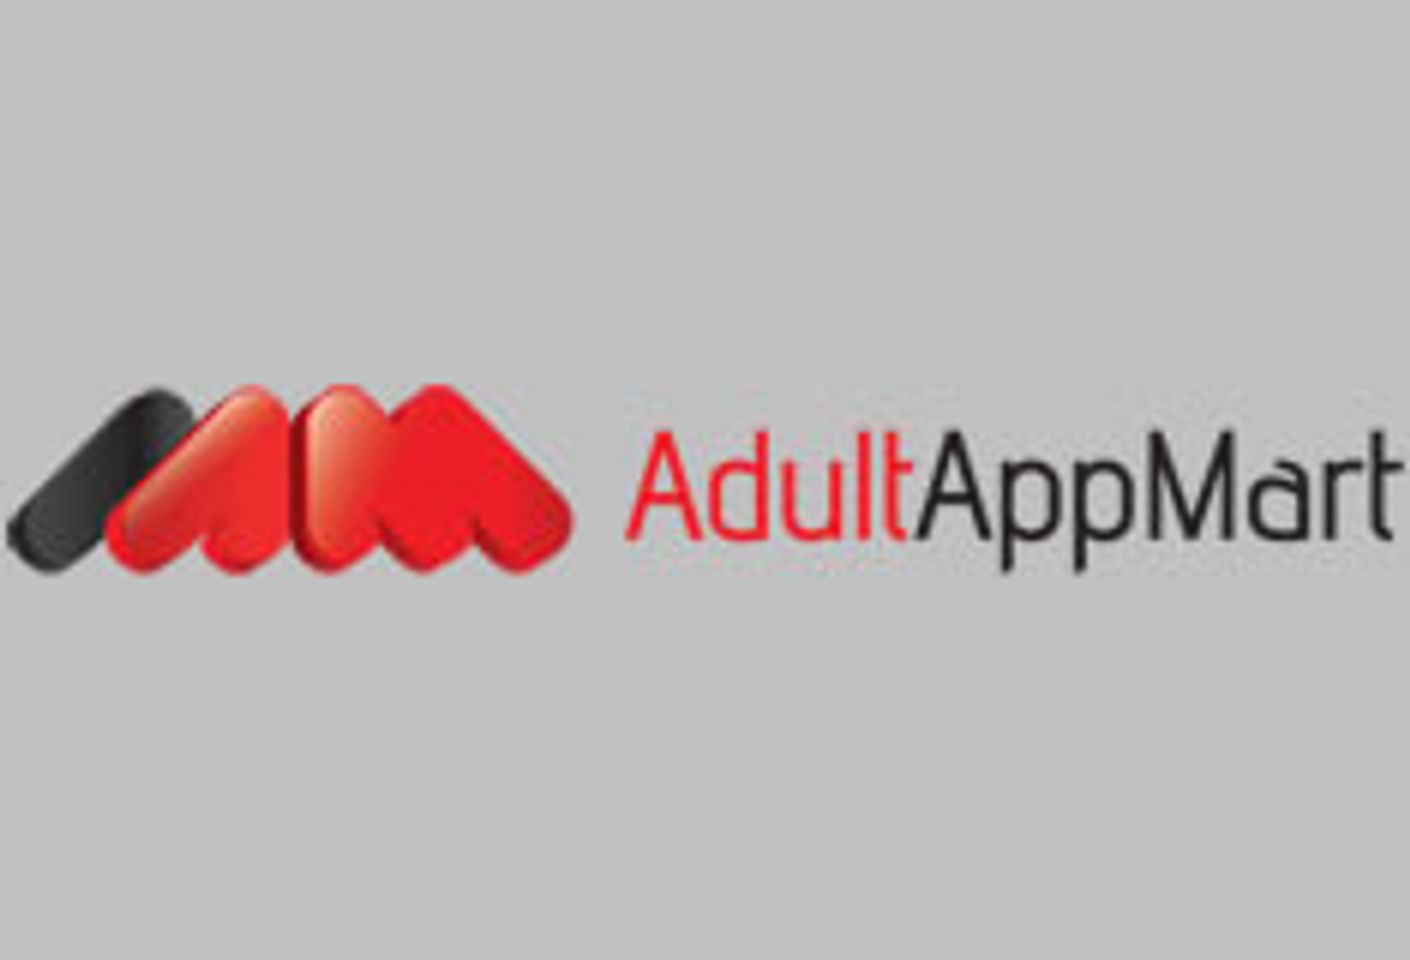 AdultAppMart Now Offering Development Services